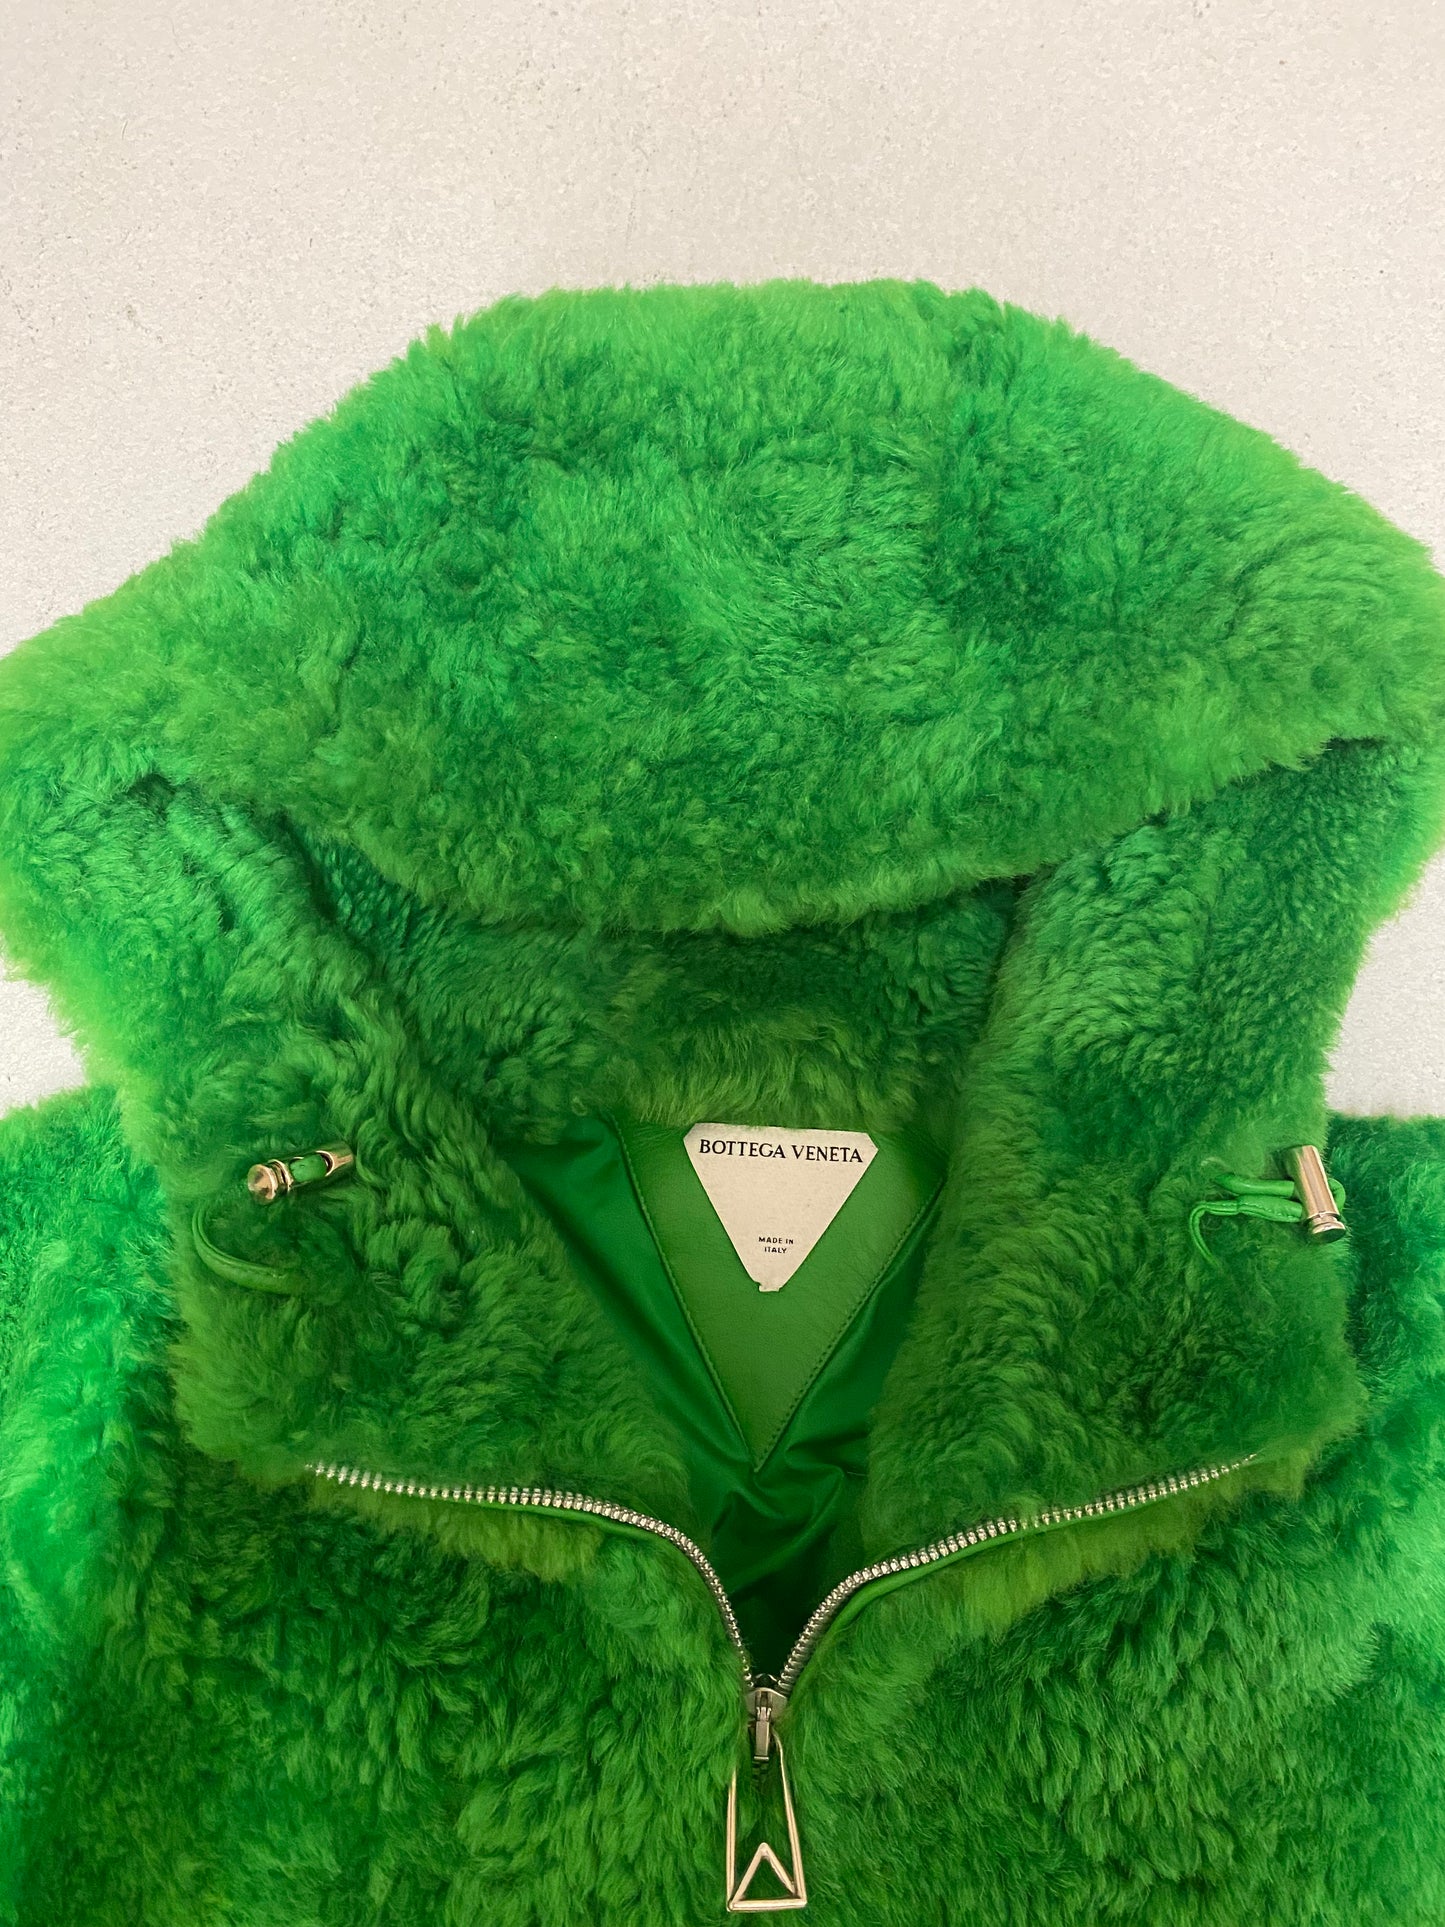 Bottega Veneta Daniel Lee lamb fur shearling green grinch jacket SZ:48